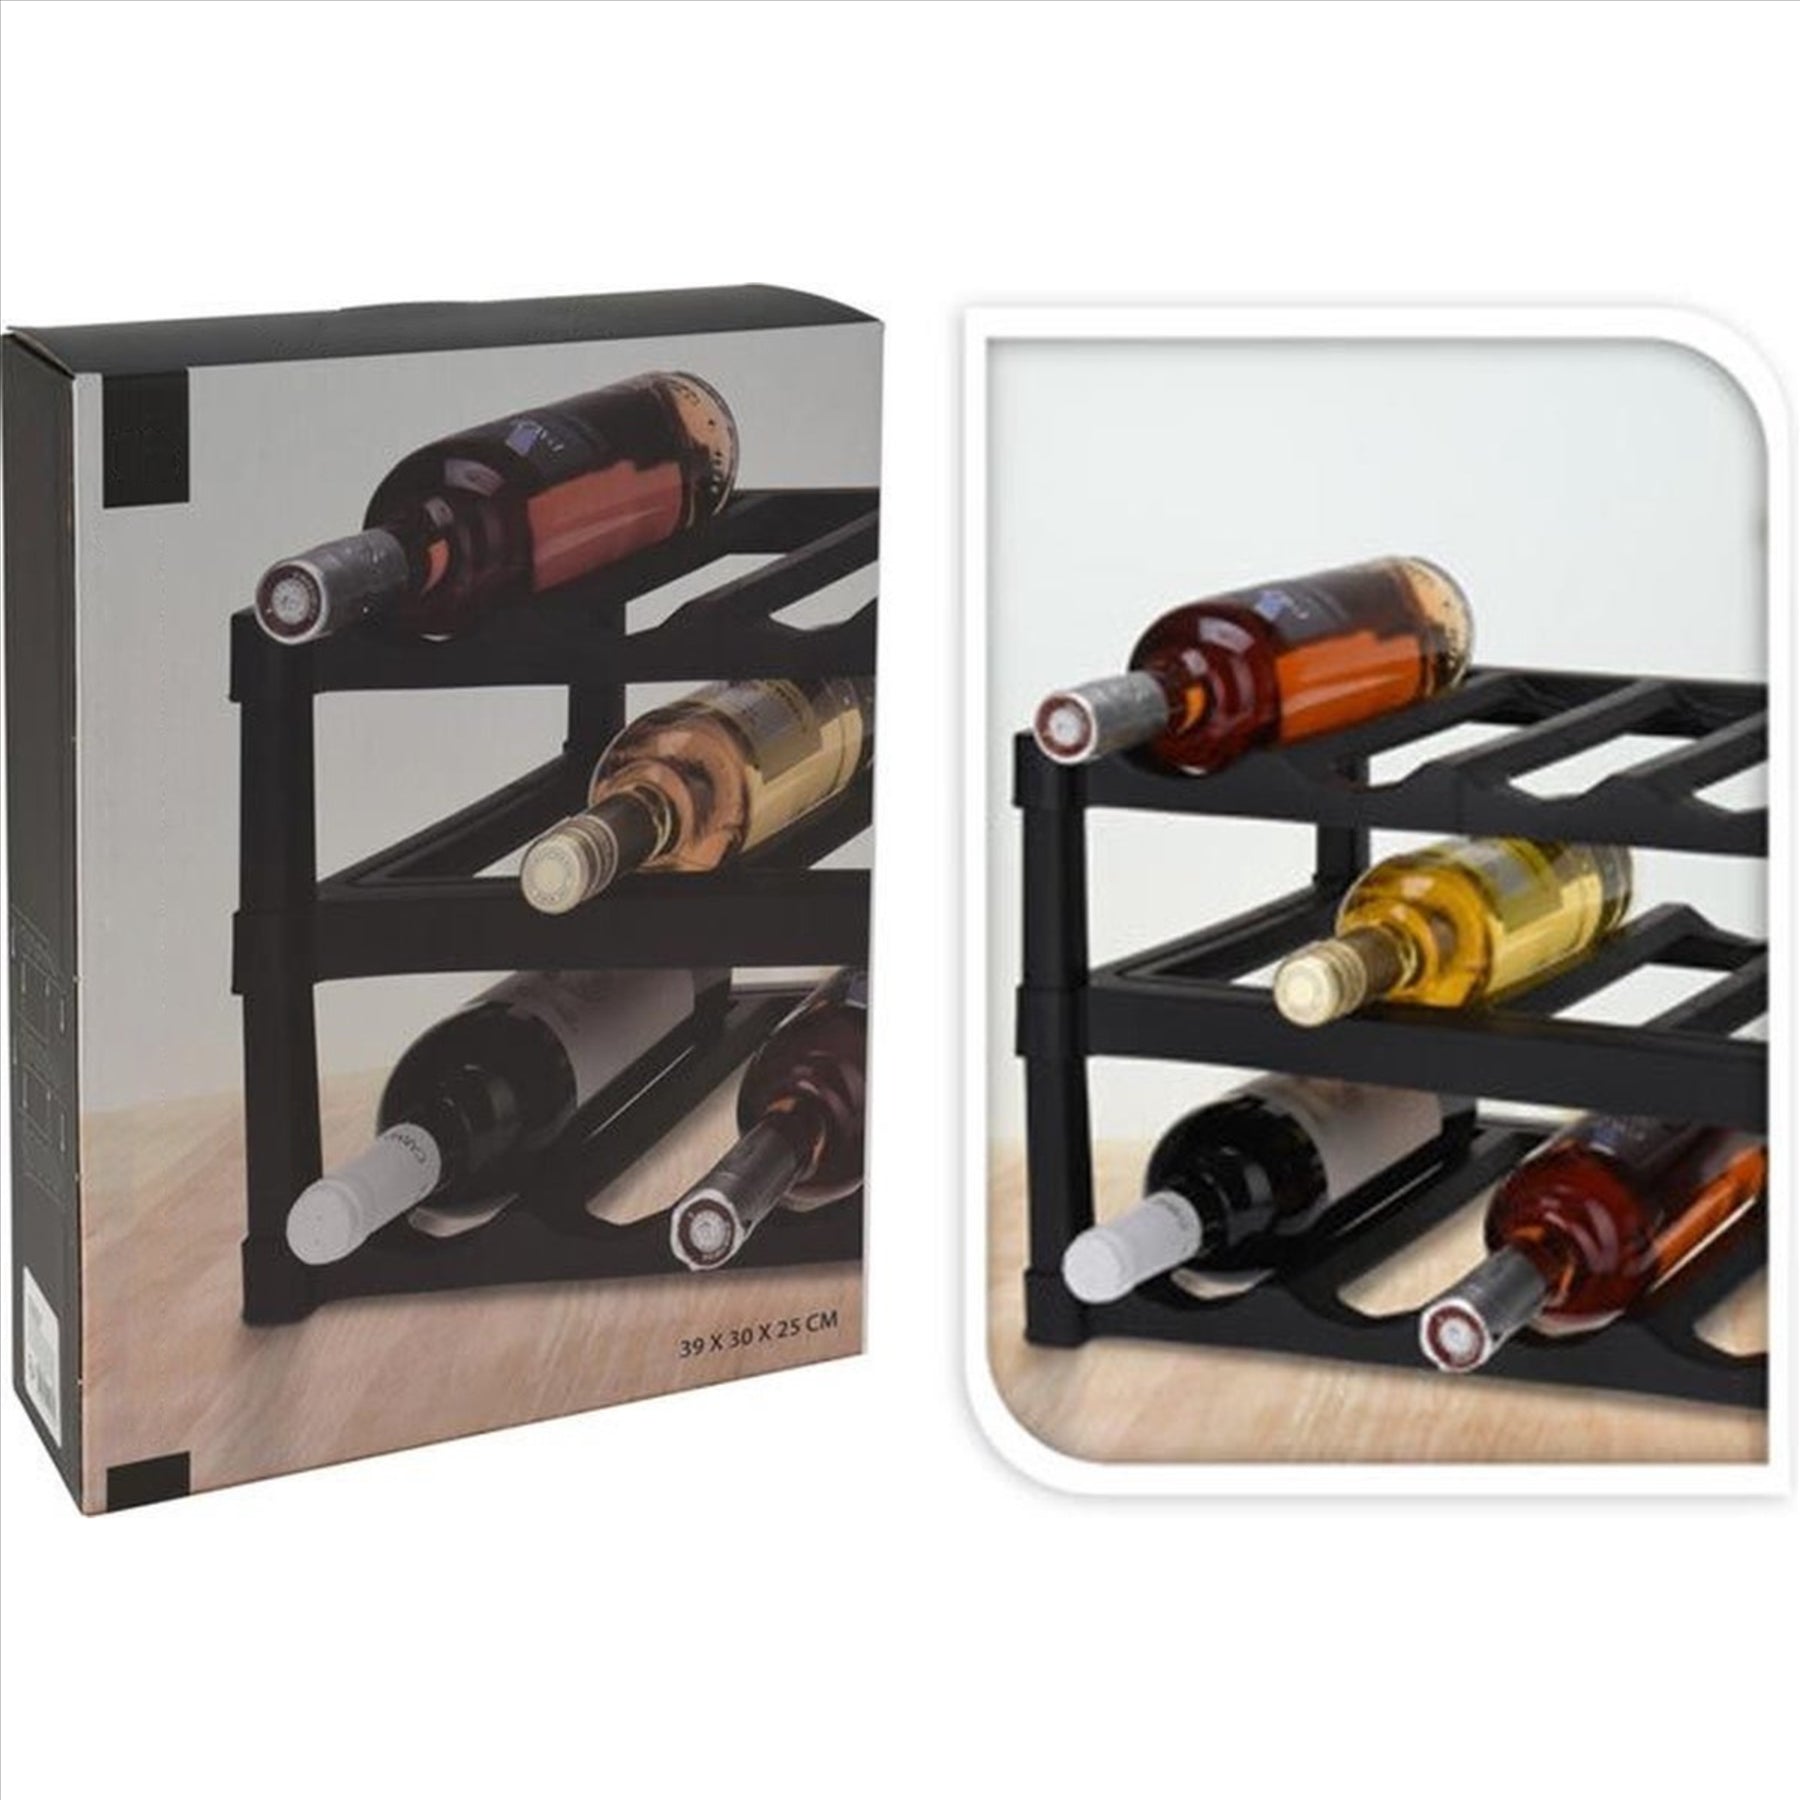 3 Tier Stackable 12 Bottle Wine Storage Rack by Geezy - UKBuyZone